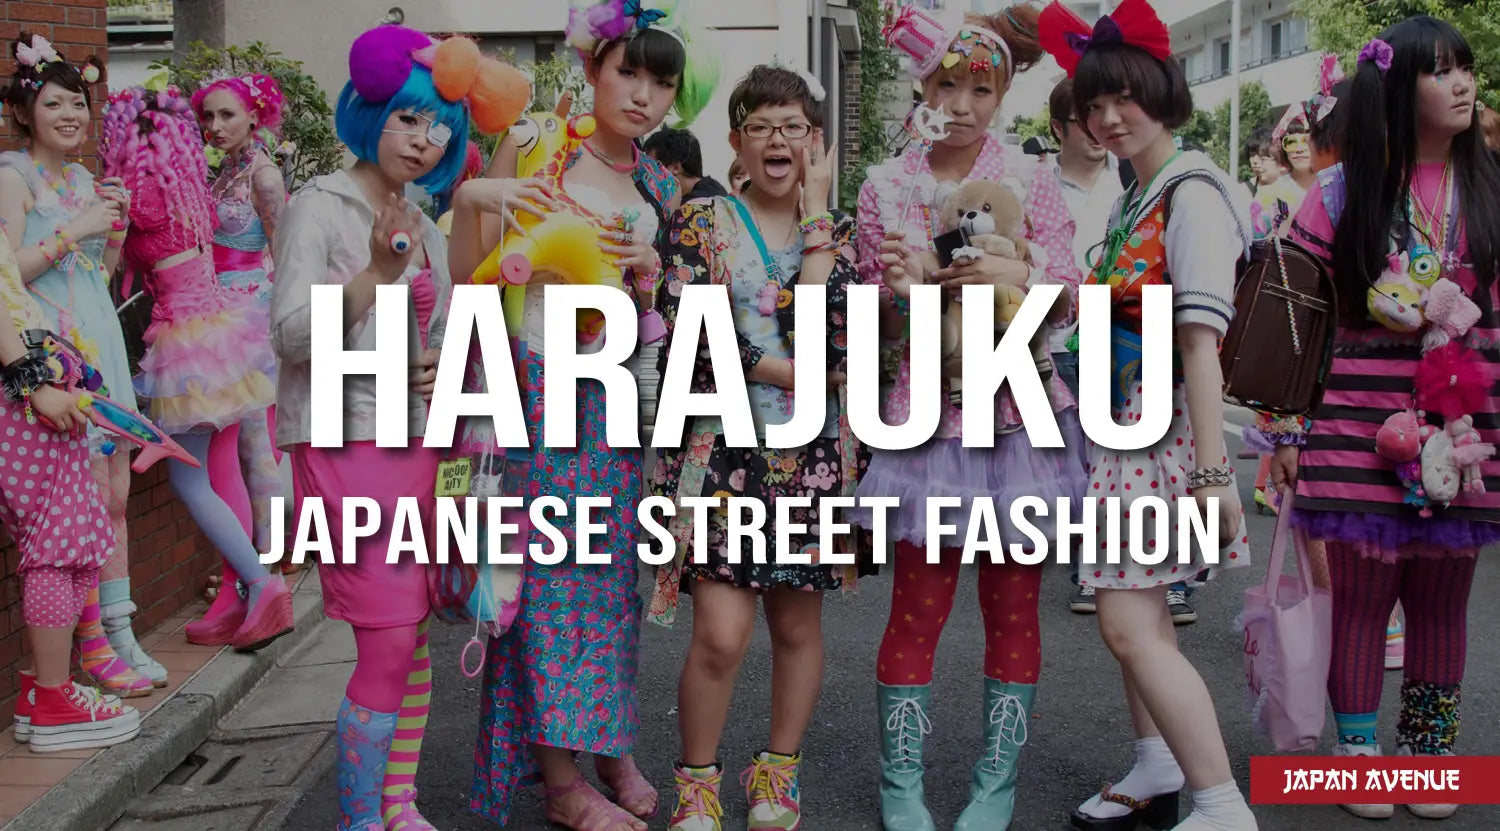 Harajuku Fashion Styles: all Types